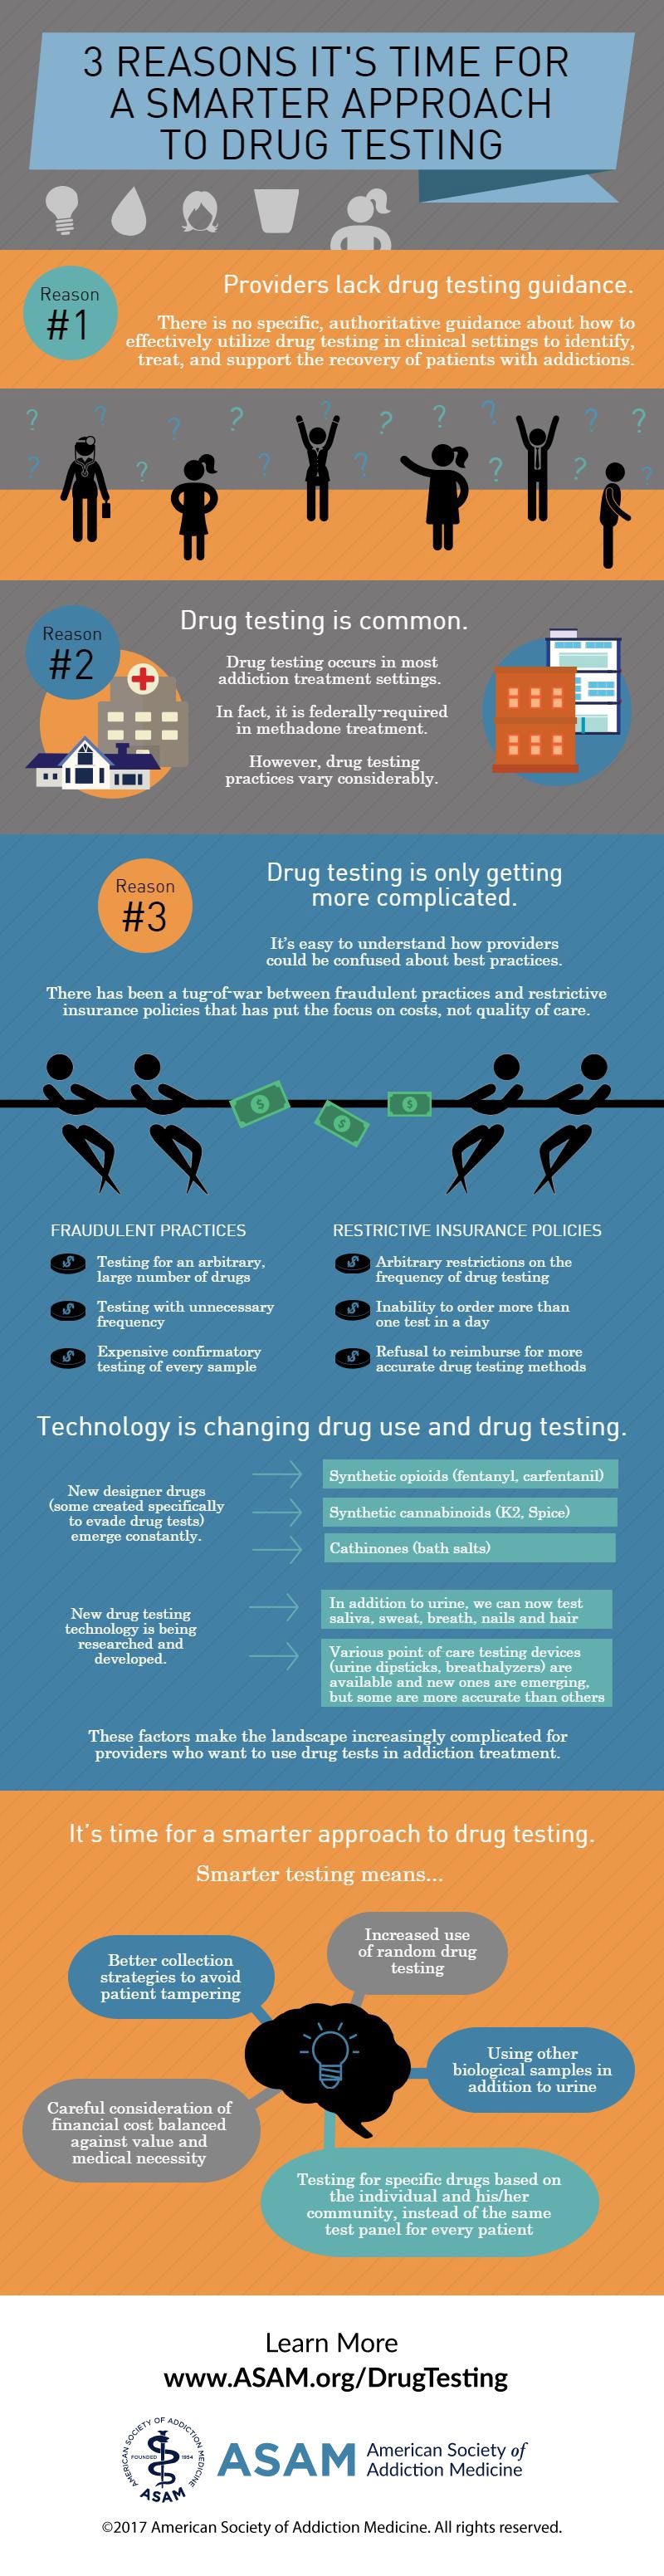 Smarter-Drug-Testing-Infographic-6-23-17_ASAM